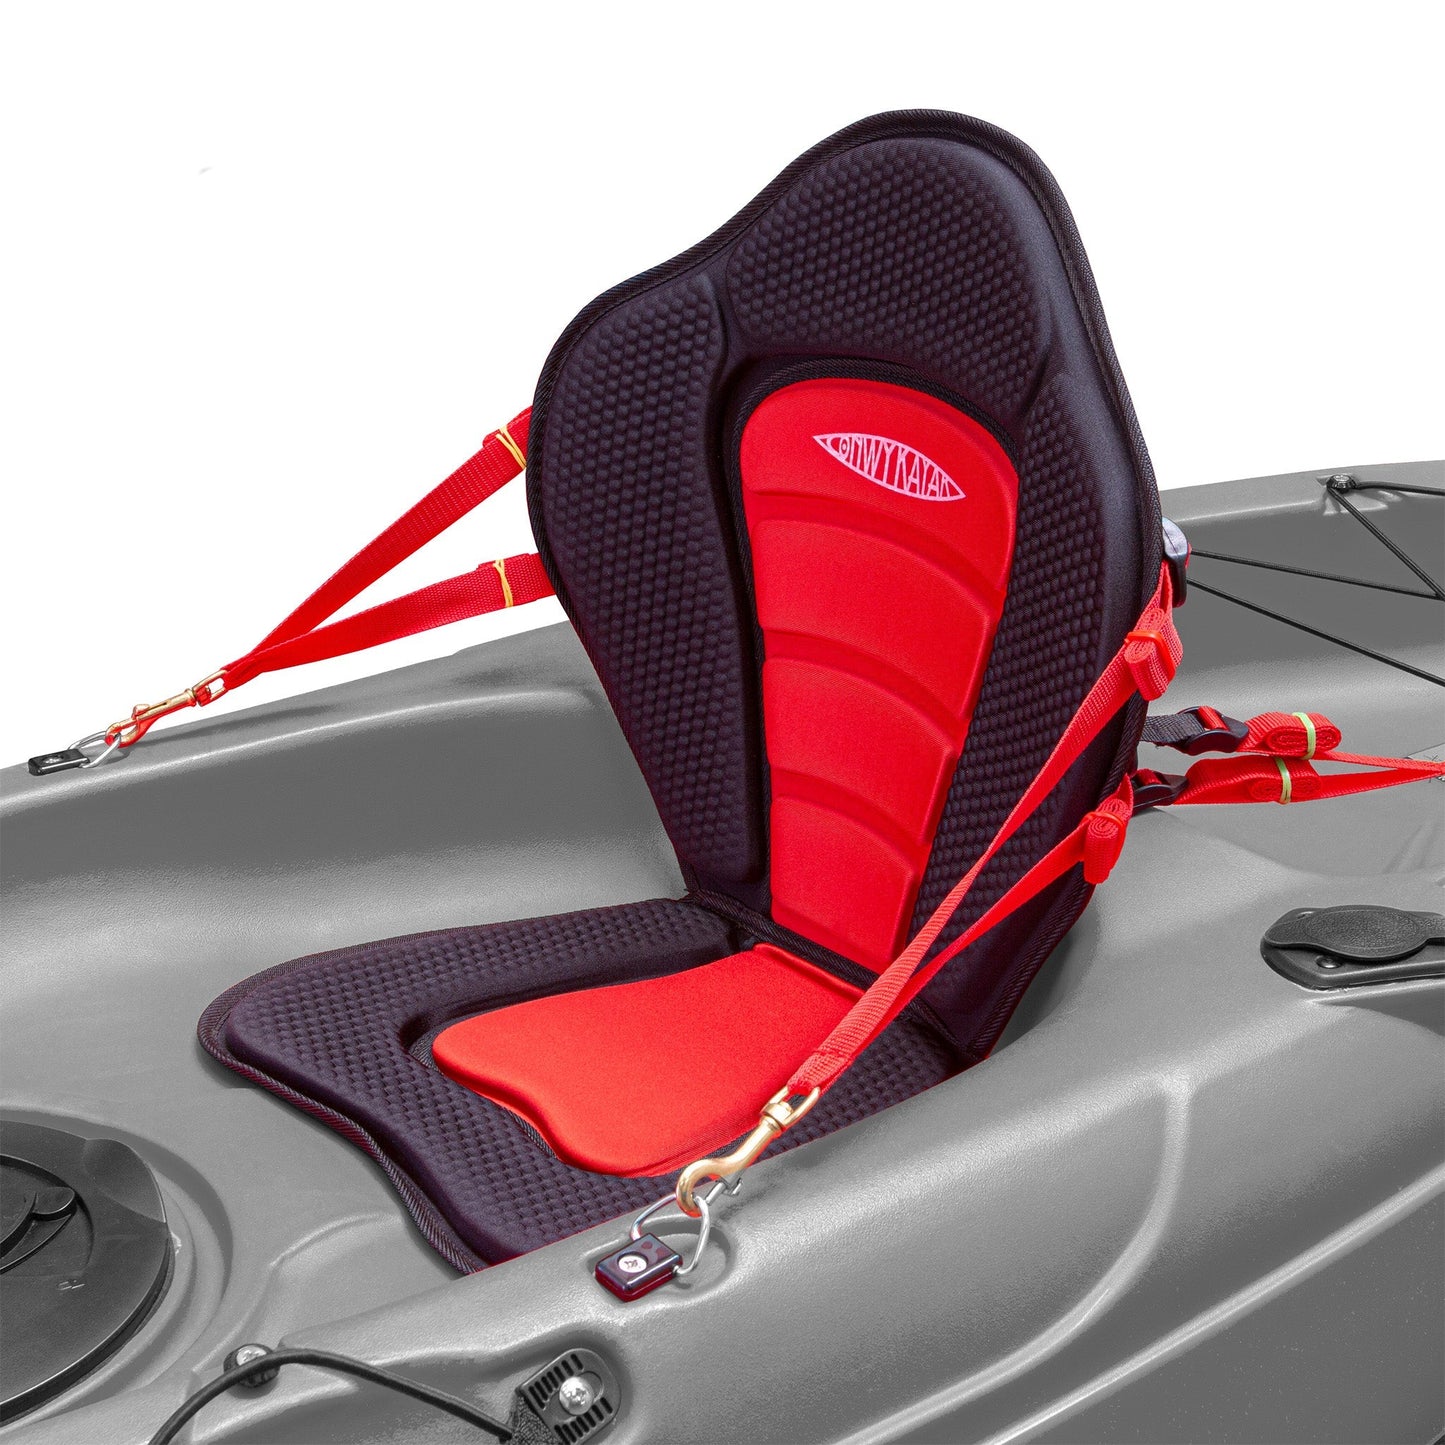 Conwy Kayak - High Performance Adjustable Kayak Seat | Conwy Kayaks